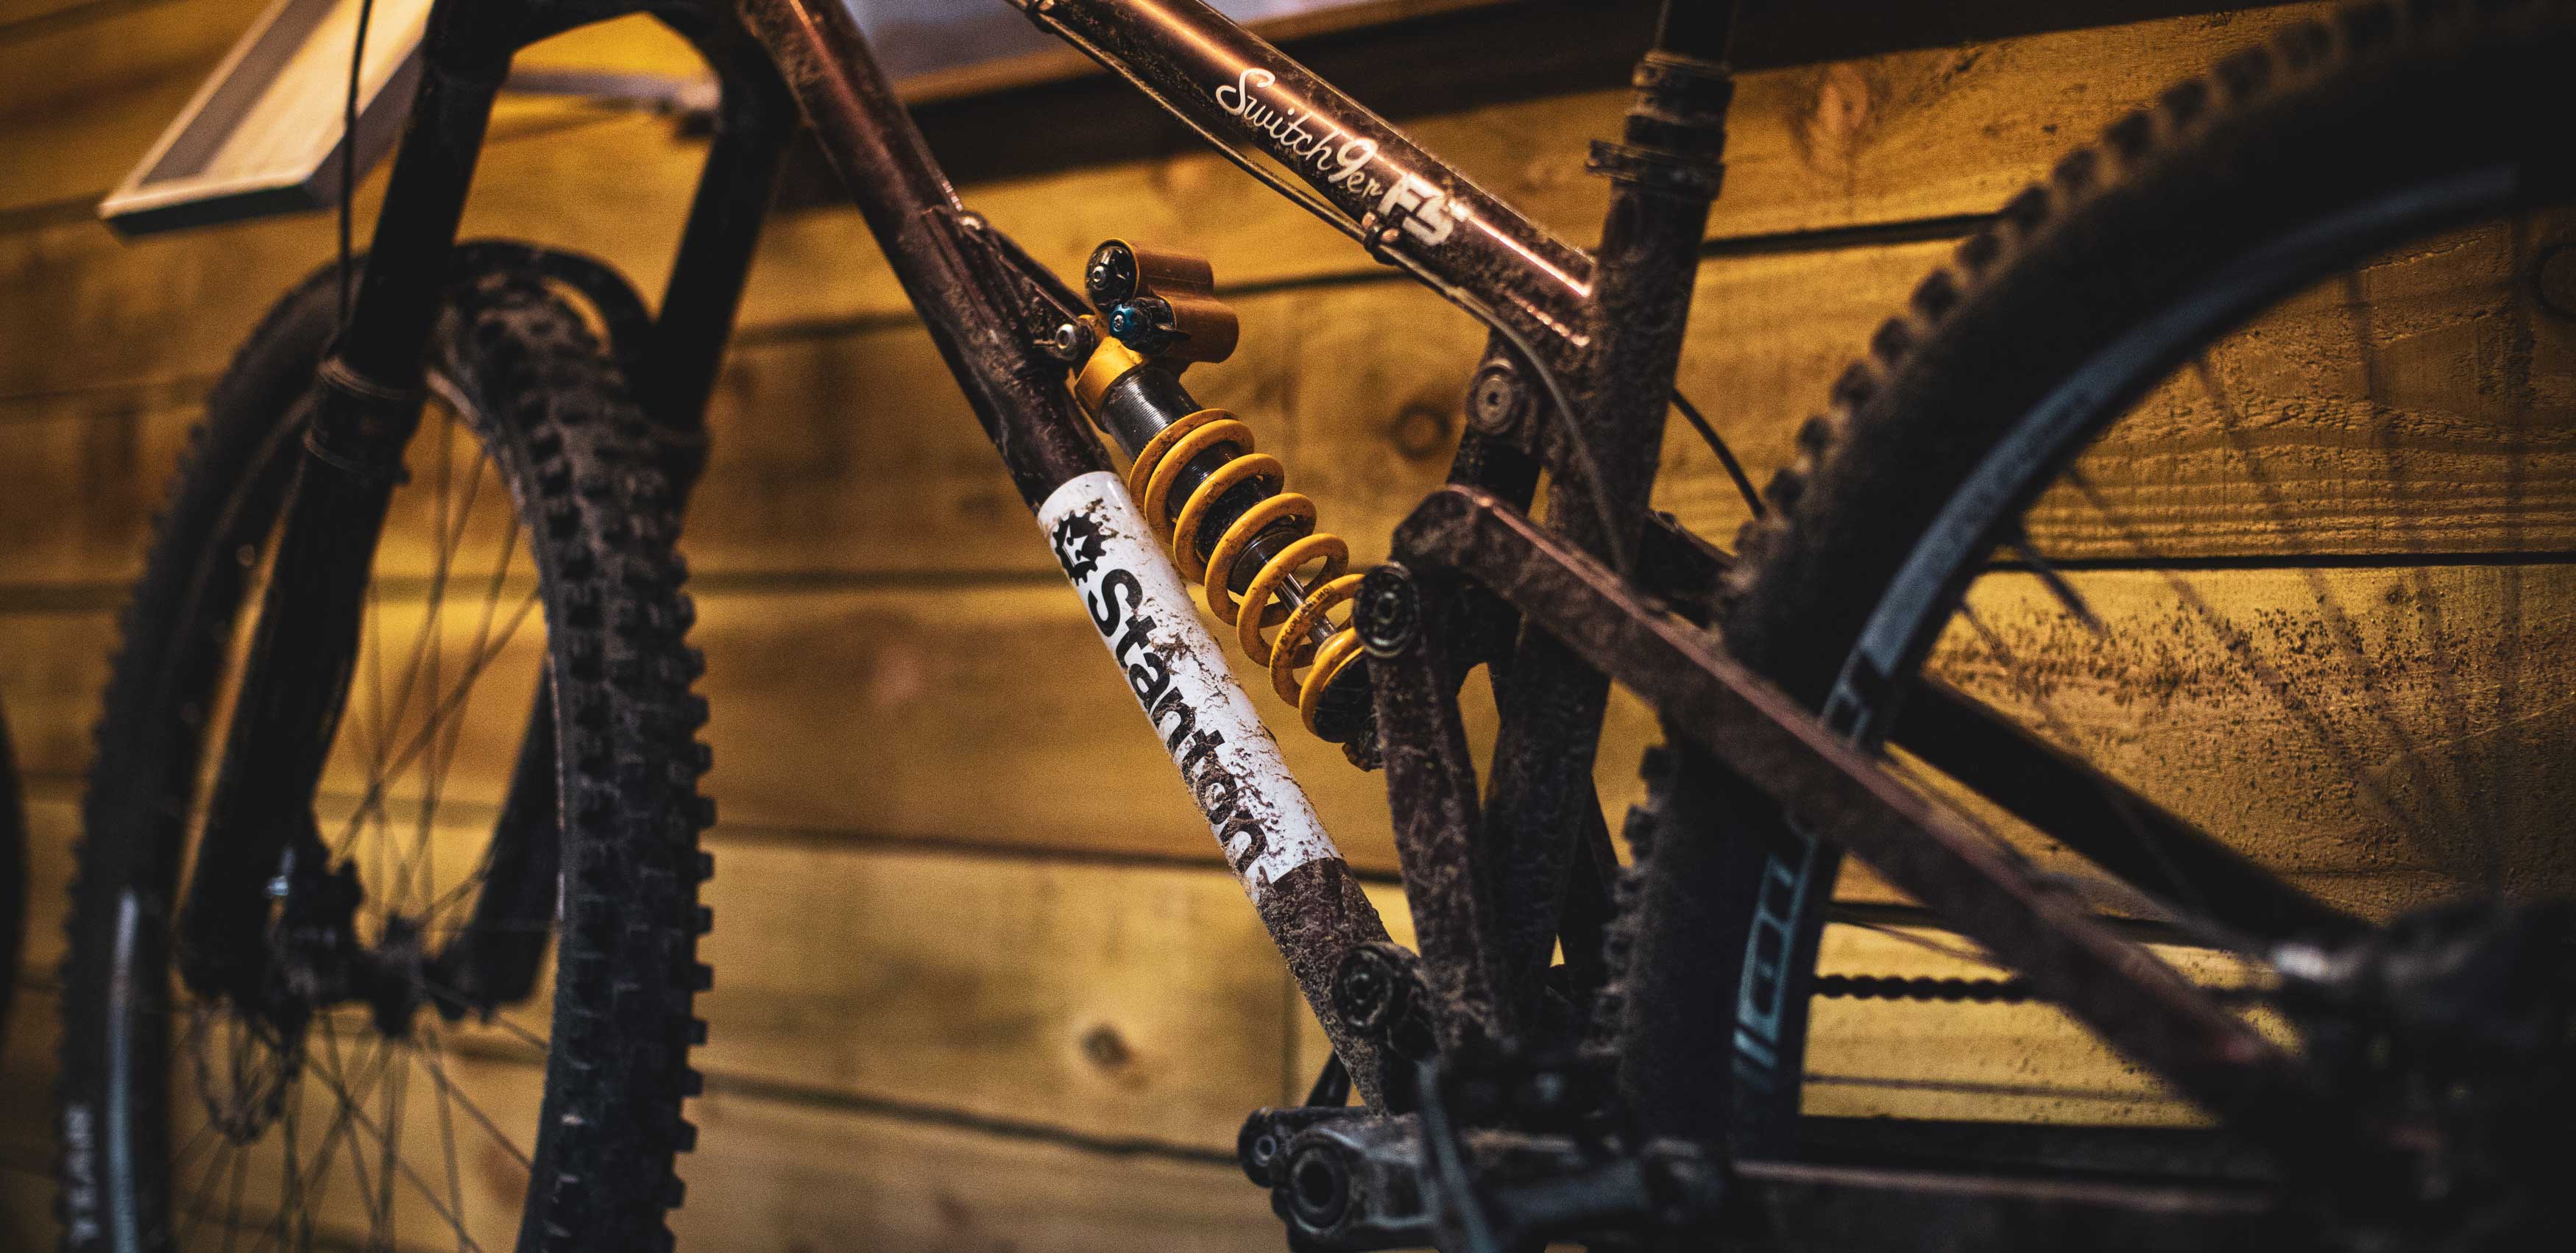 Stanton Bikes MTB frame close up